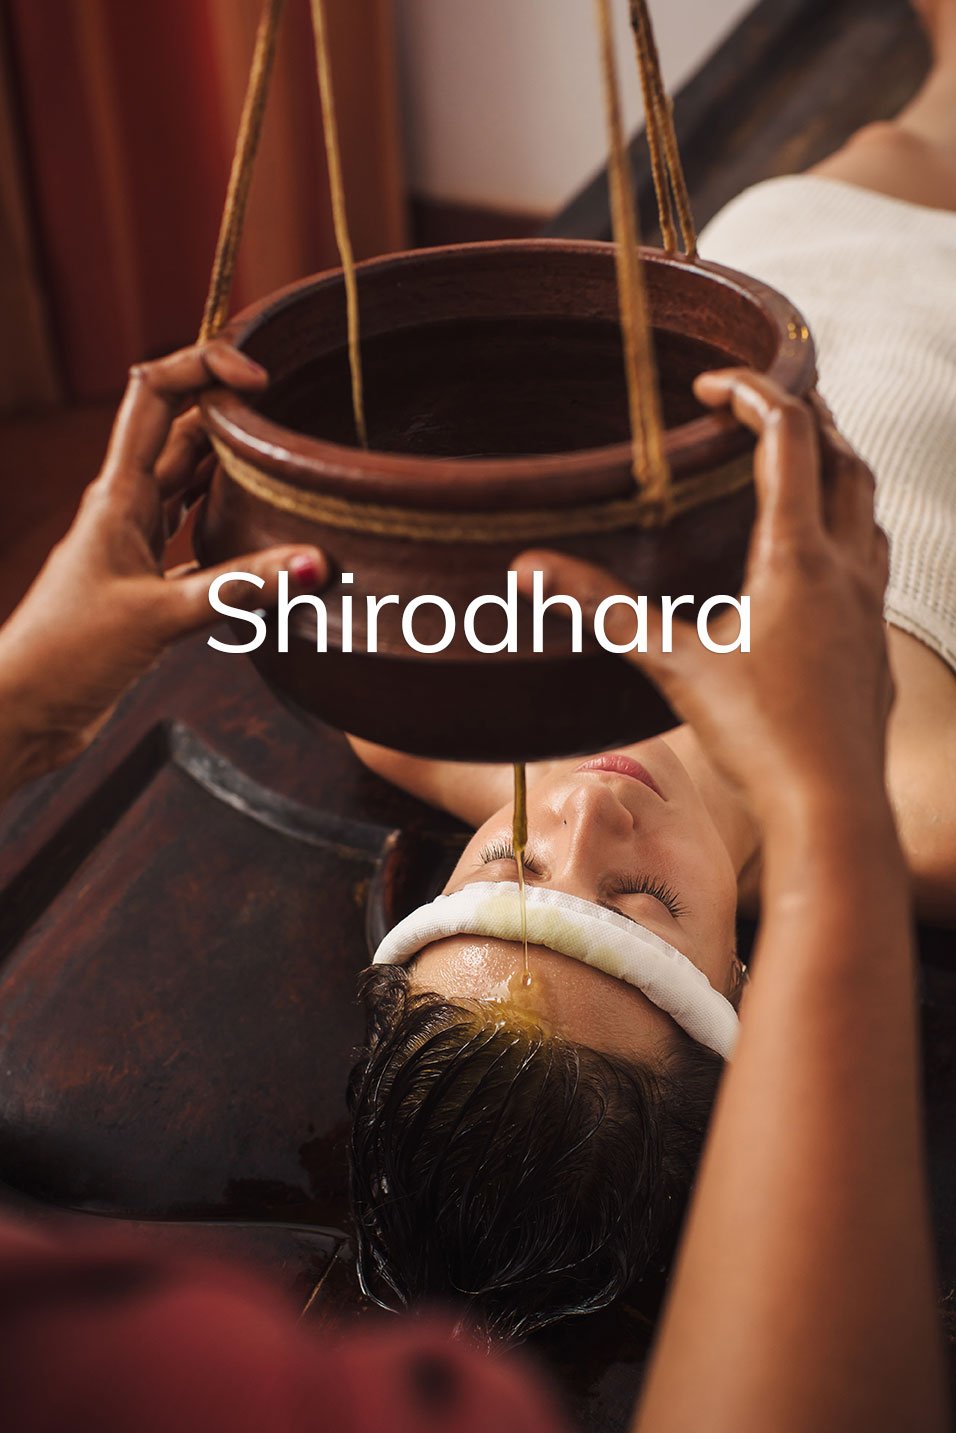 shirodhara